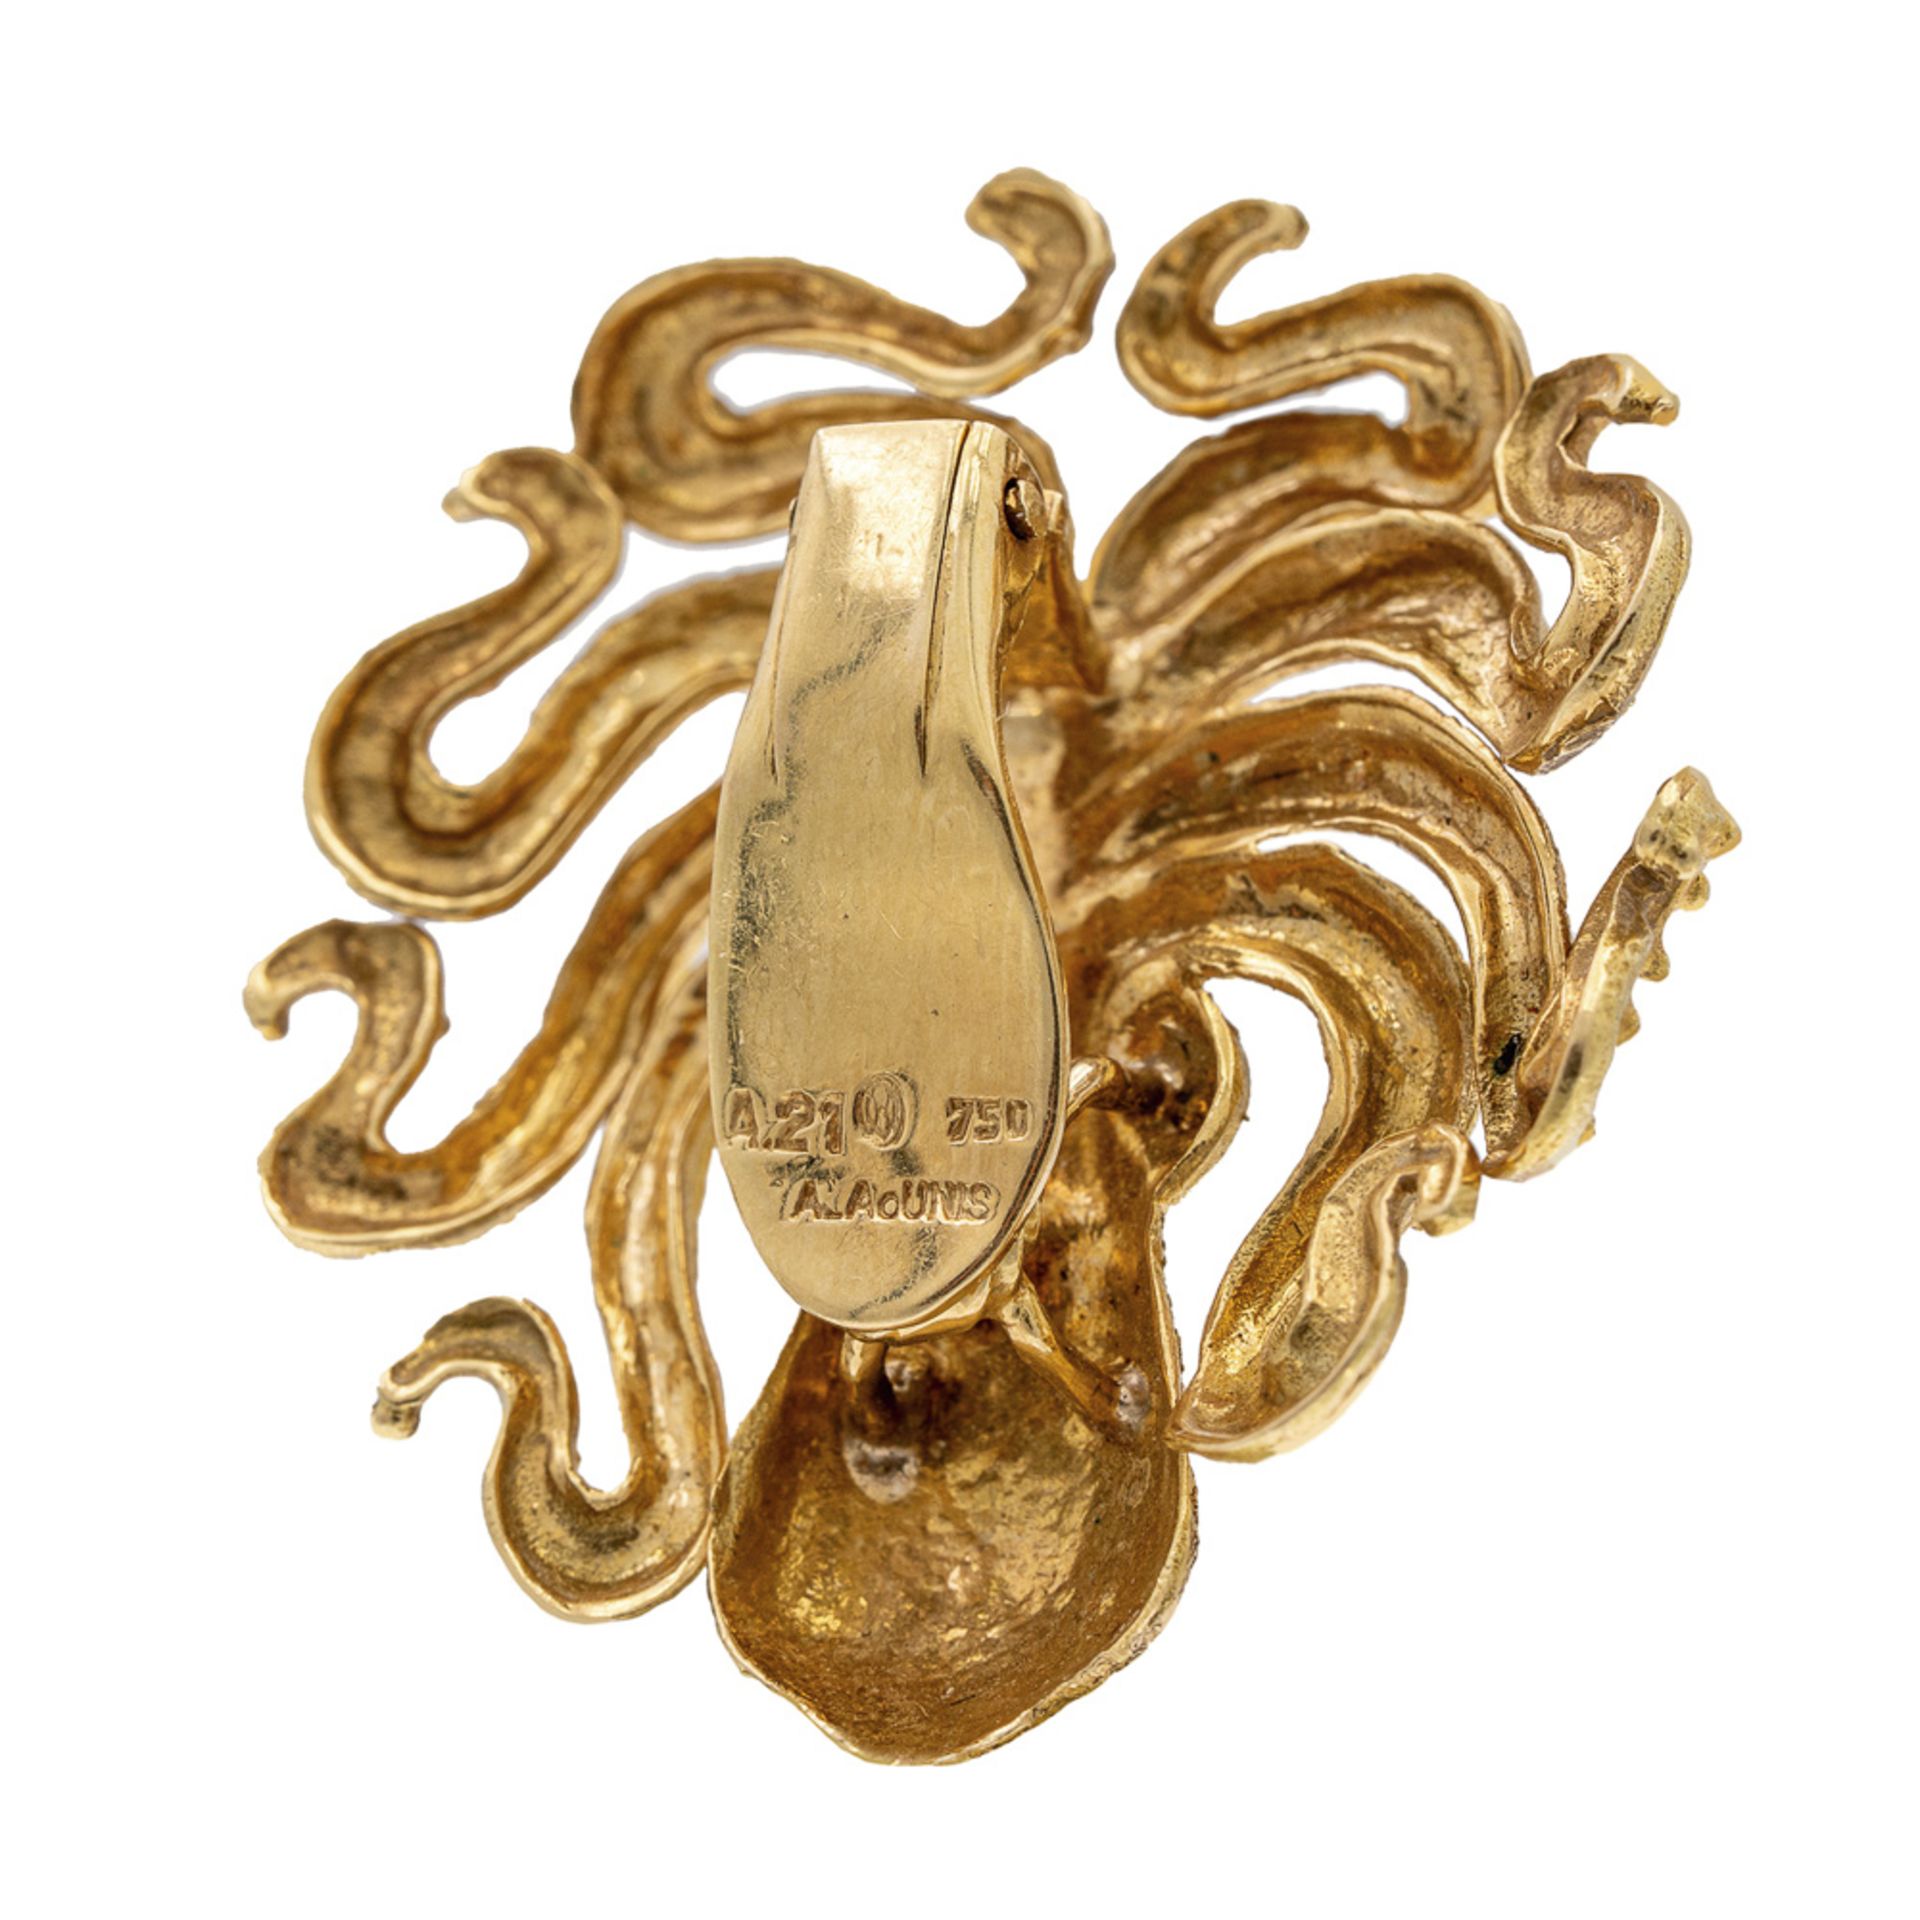 Lalaounis octopus lobe earrings - Image 2 of 2